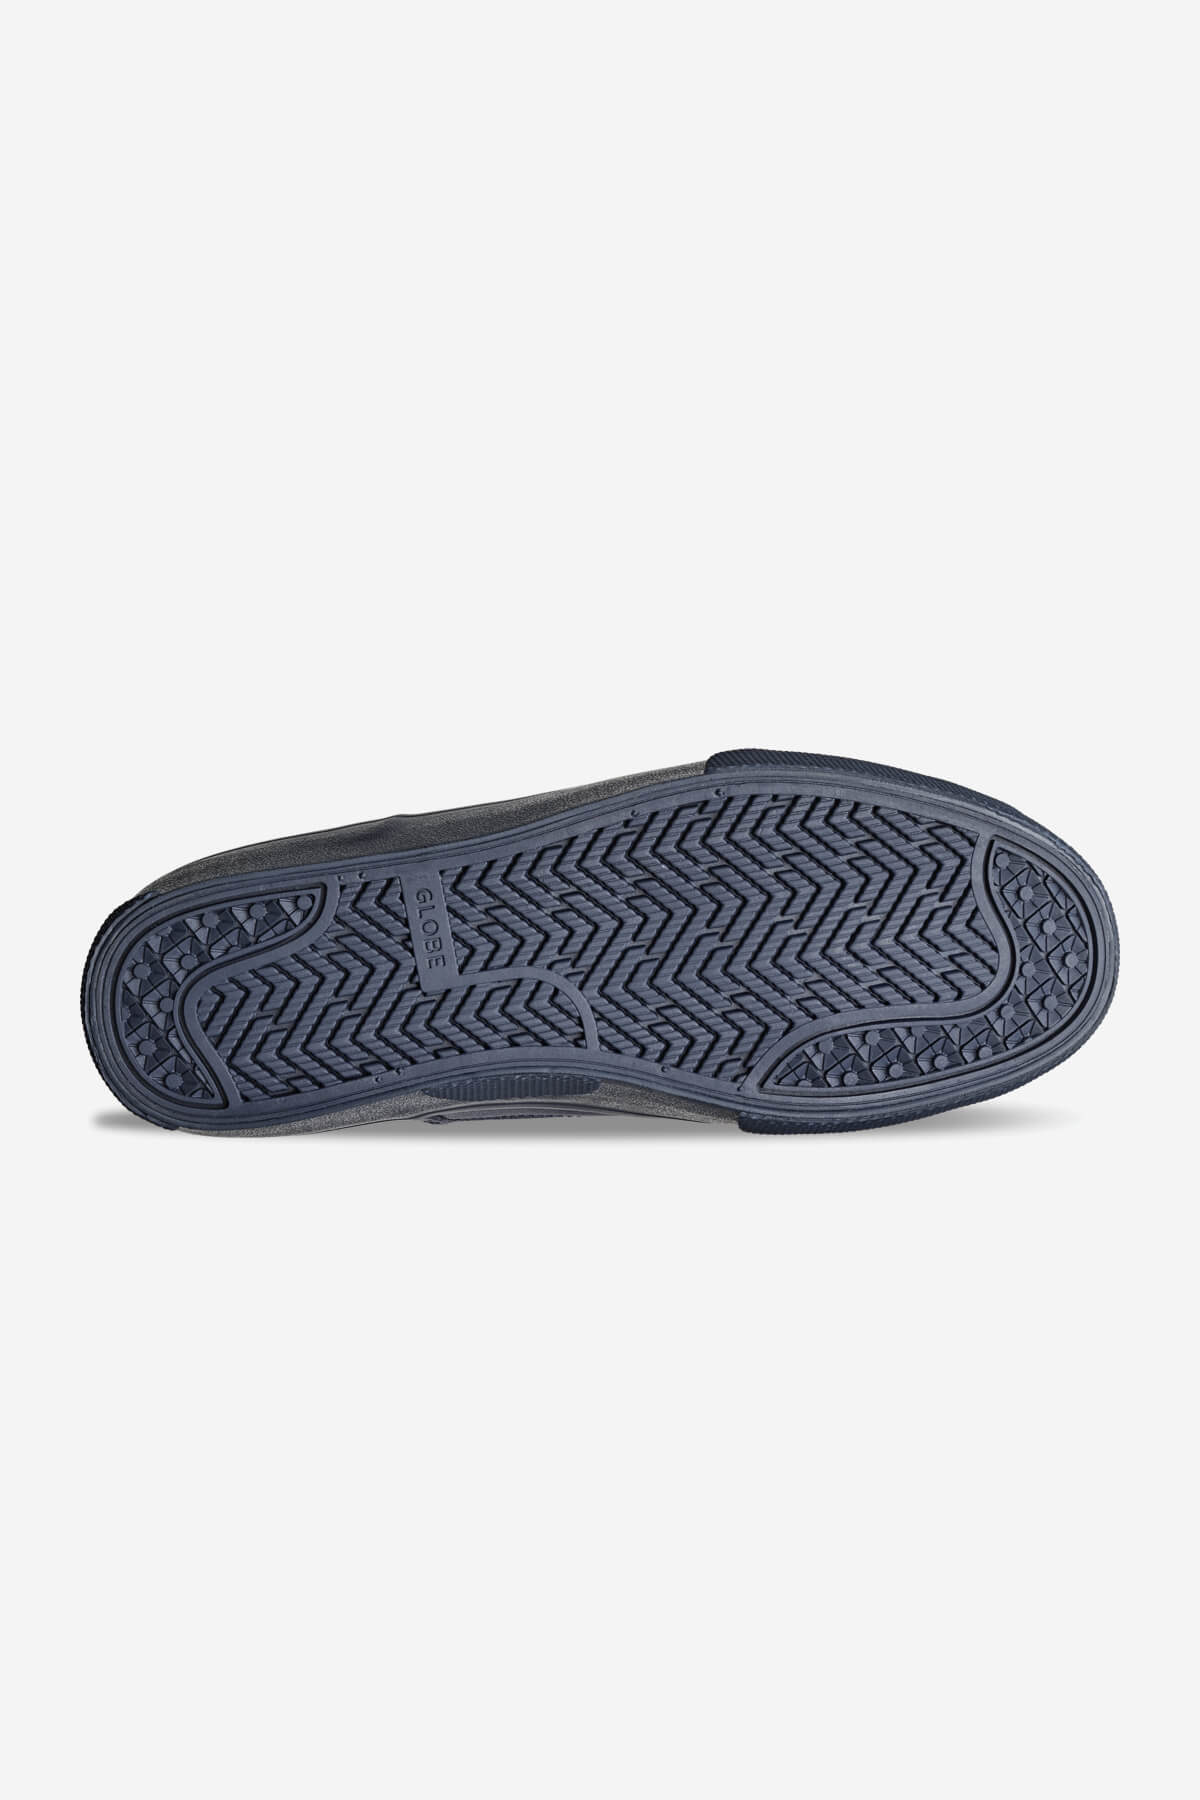 Globe - Dimension - Medianoche Blue Dip - skateboard Zapatos